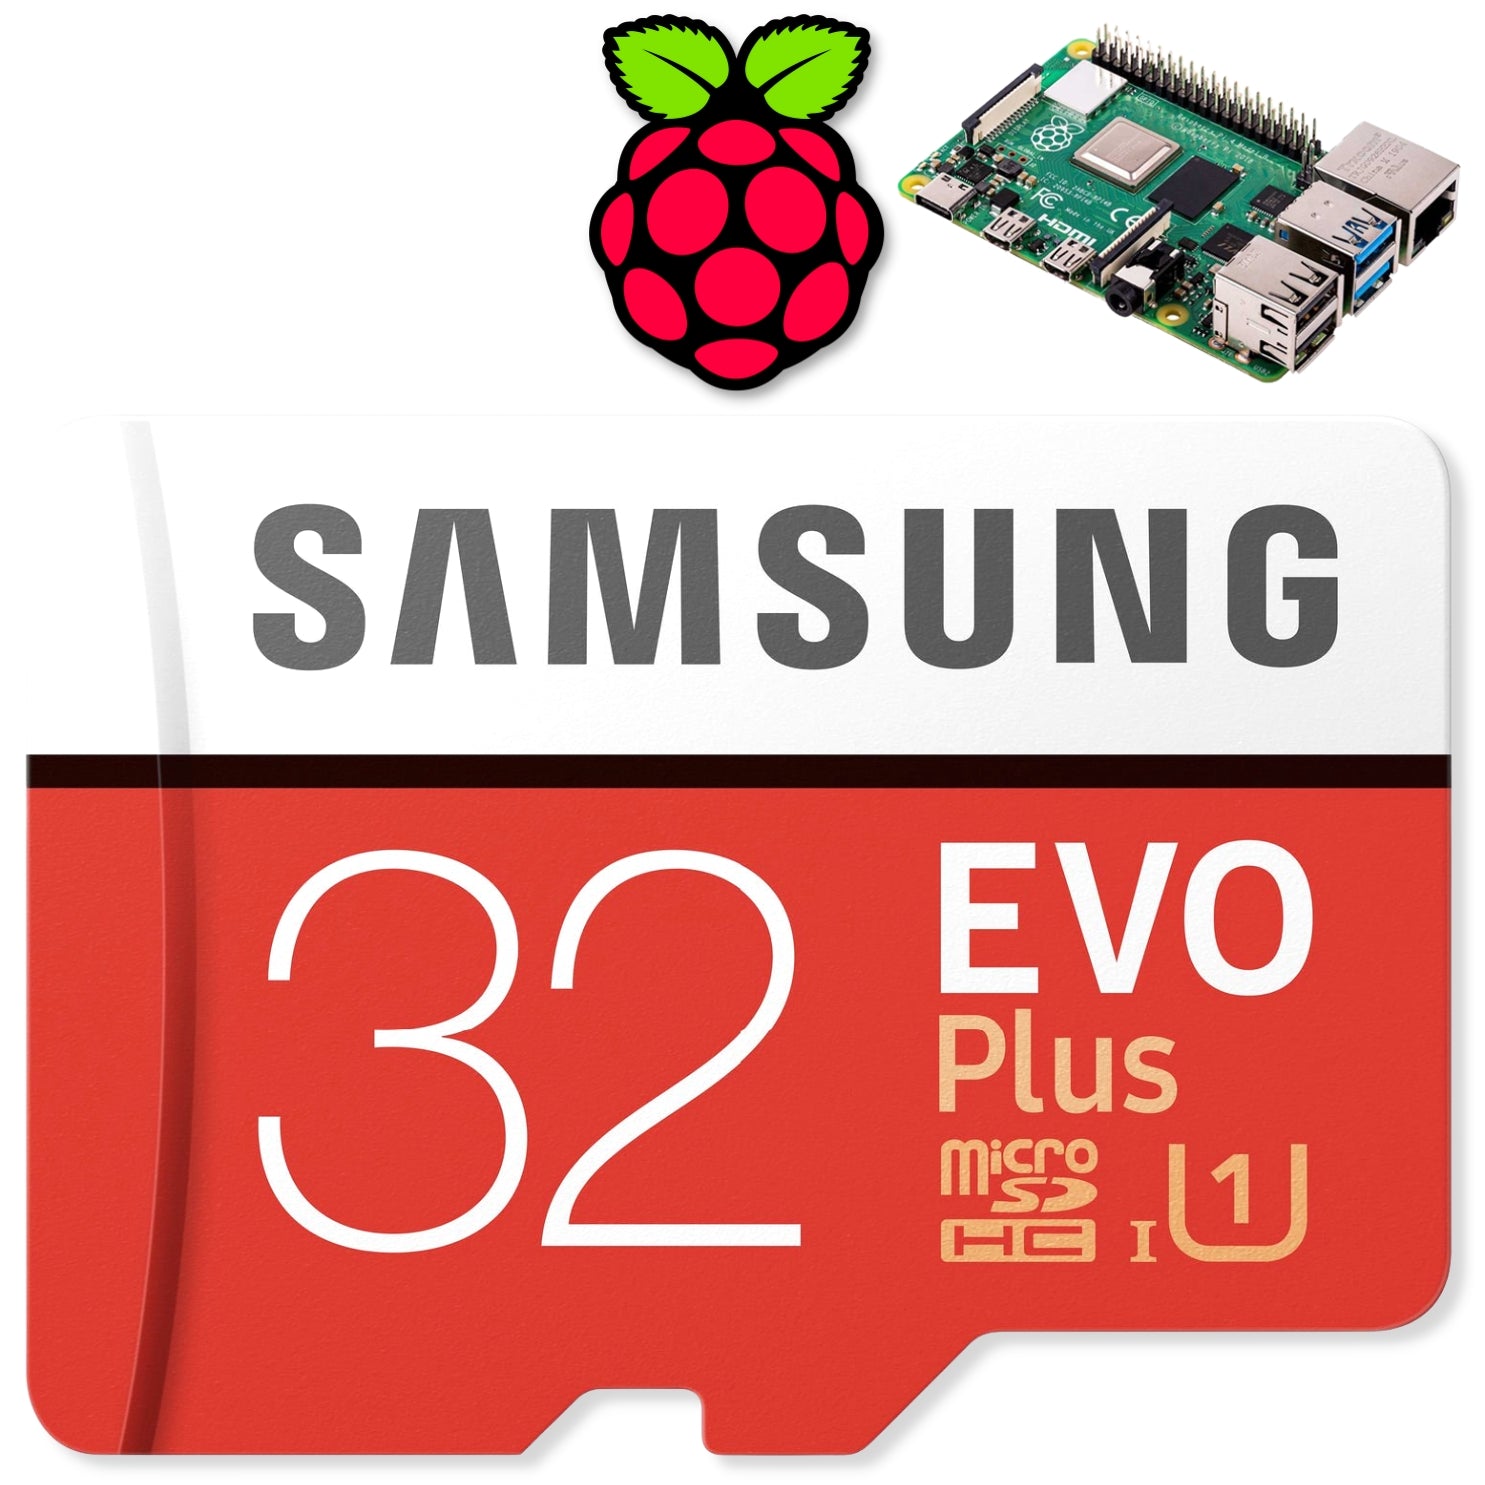 NOOBS 3.8.1 Preloaded Micro SD for Raspberry Pi 400, 4, 3B+, 3A+